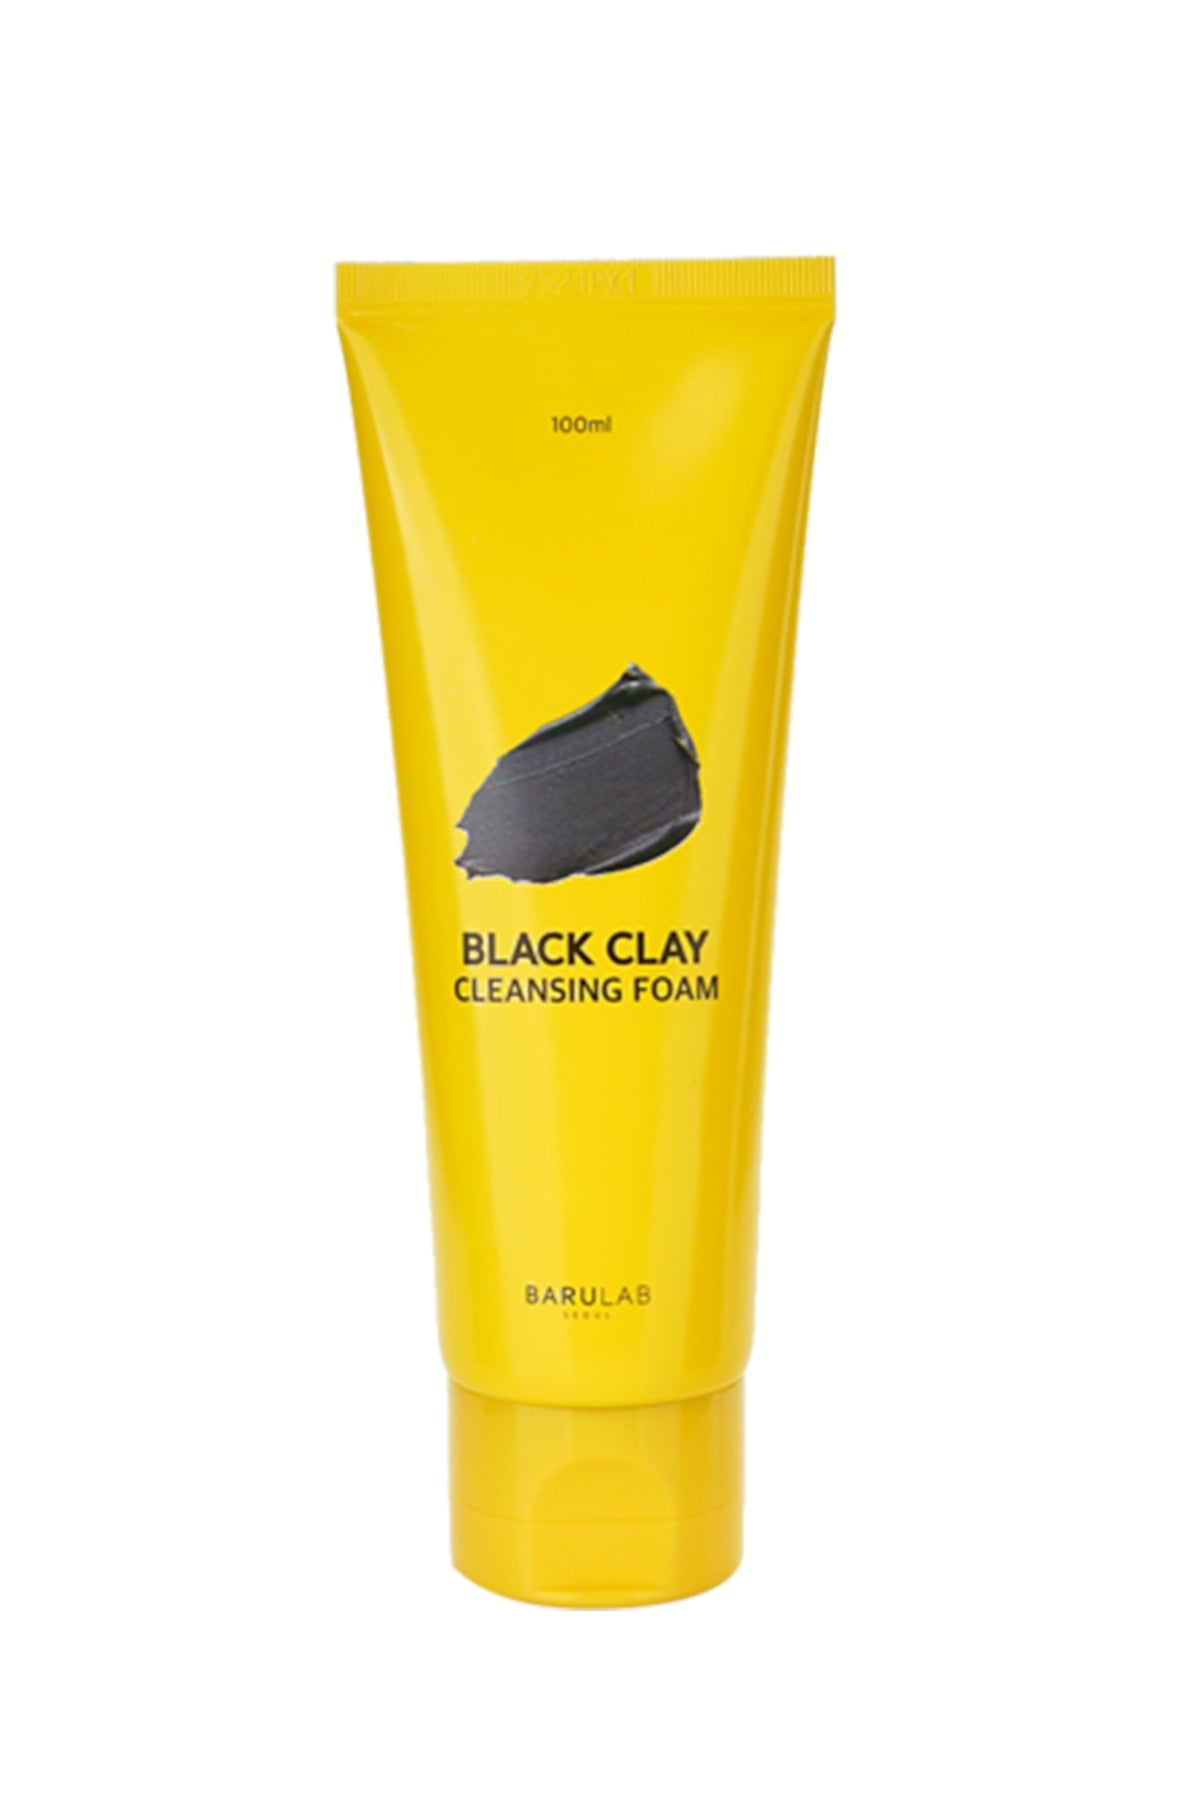 Barulab Black Clay Cleansing Foam – Volkanik Kül & Kömür Temizlik Köpüğü